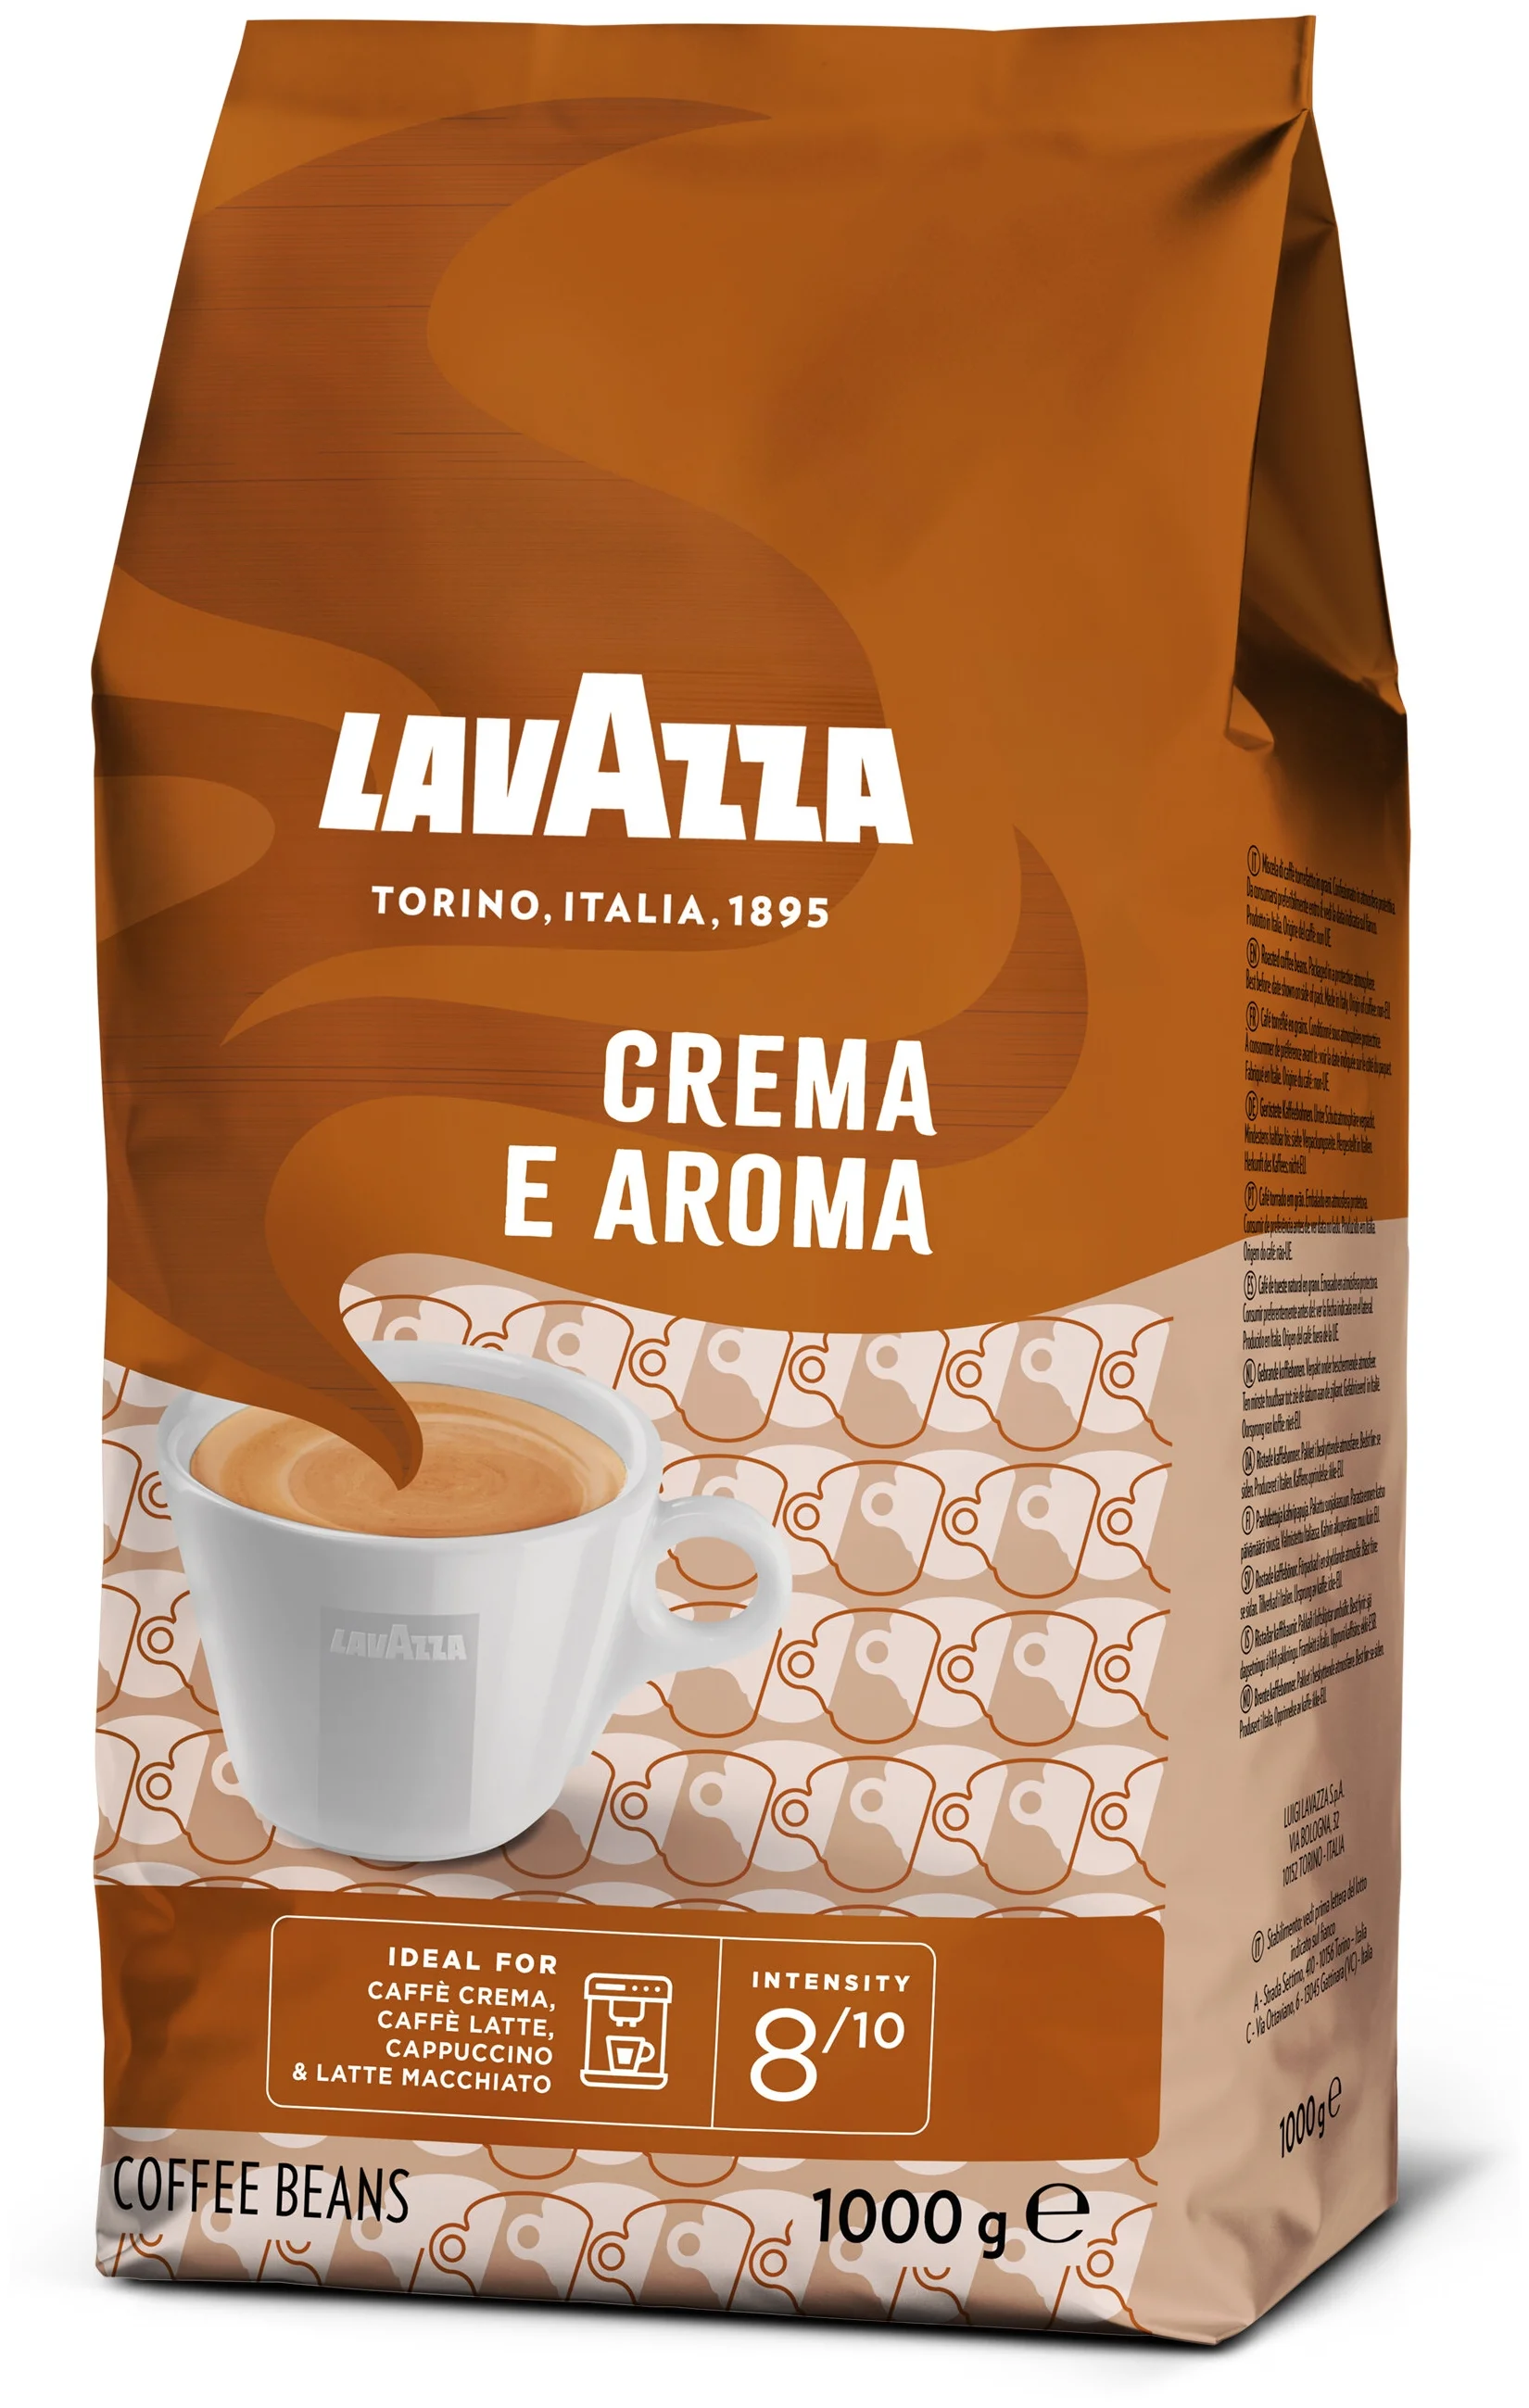 Lavazza "Crema e Aroma" - вид зерен: смесь арабики и робусты